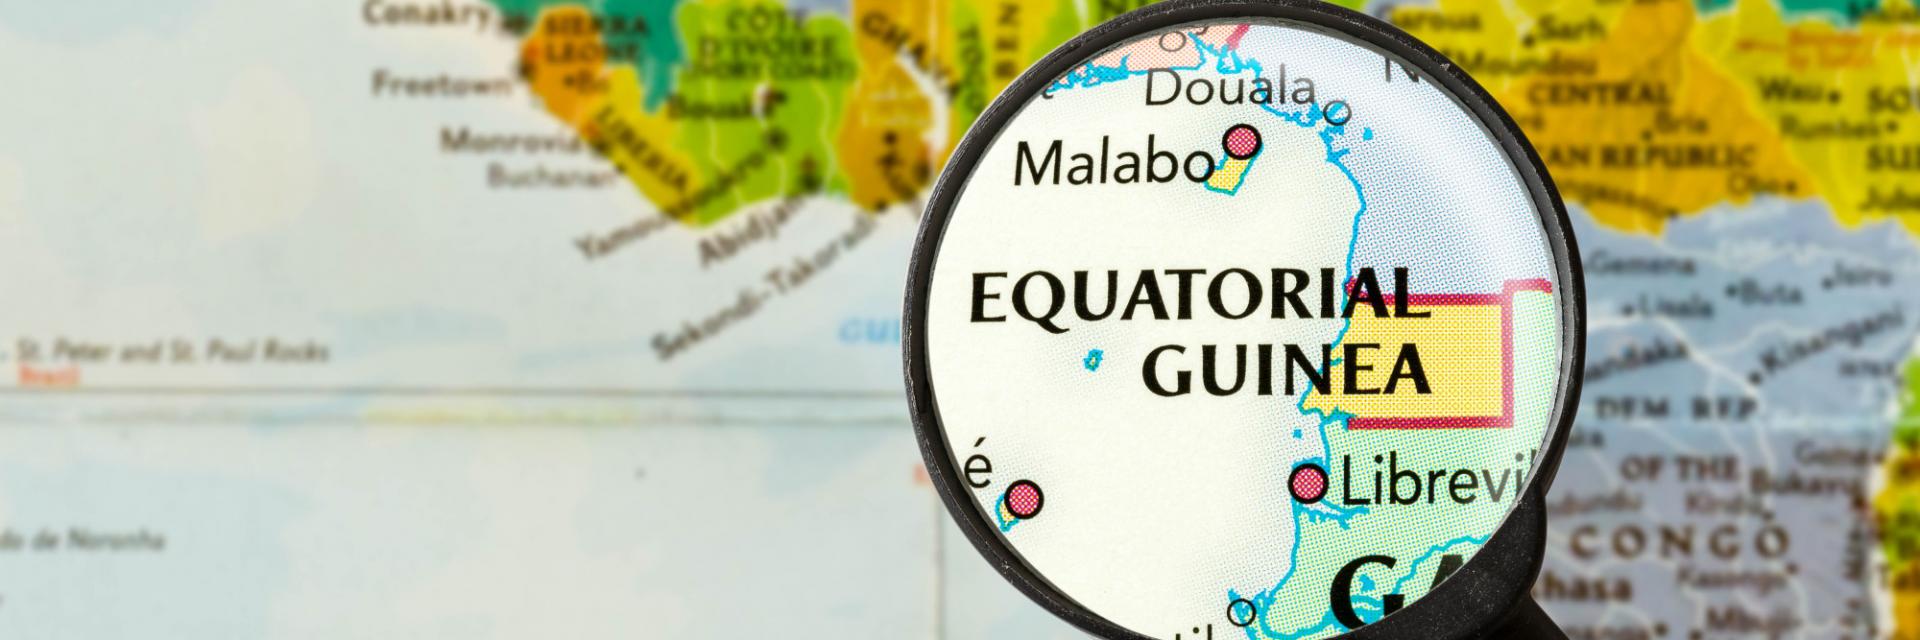 ECA Support to Equatorial Guinea for the Development of a National AfCFTA Strategy